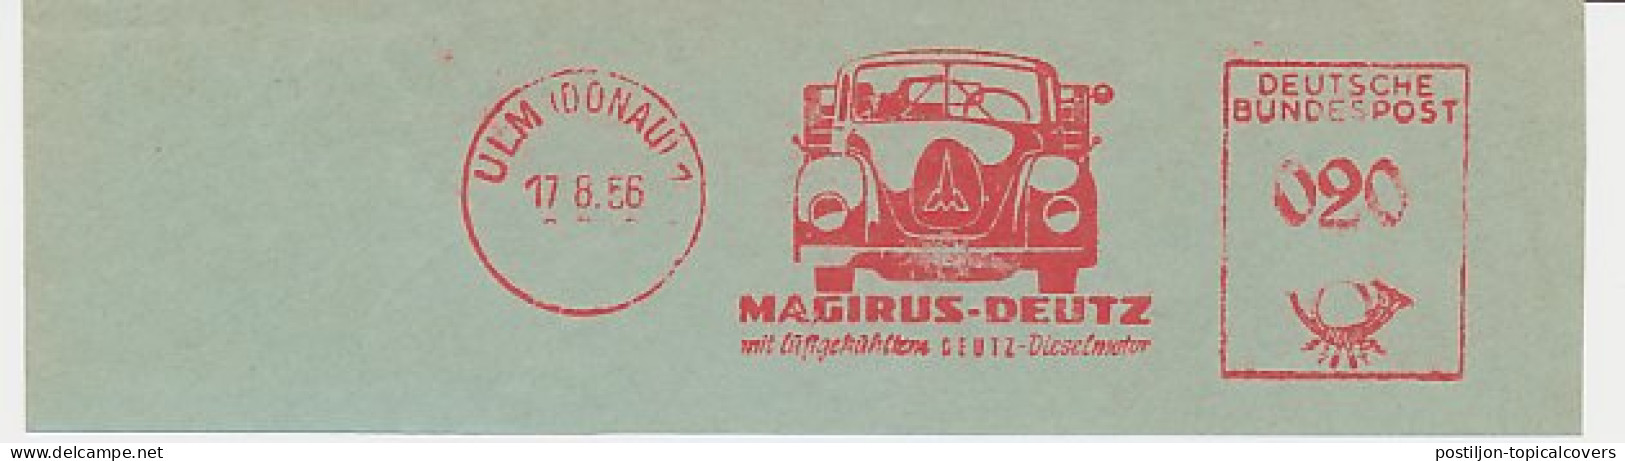 Meter Cut Germany 1956 Truck - Magirus Deutz - Camion